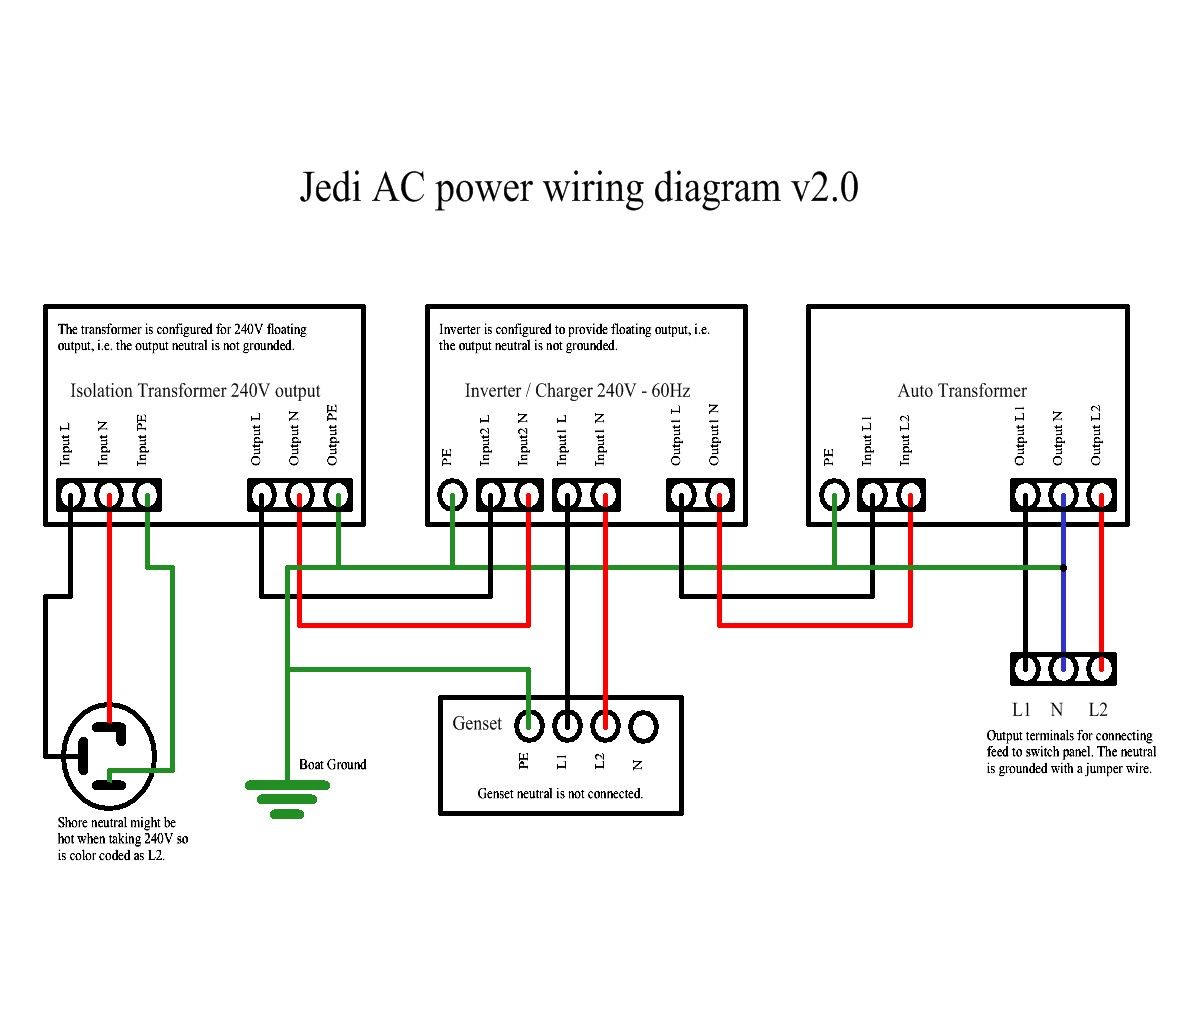 amusing bus bar wiring diagram 85 in sony cdx gt300mp wiring diagram car wiring diagrams amusing